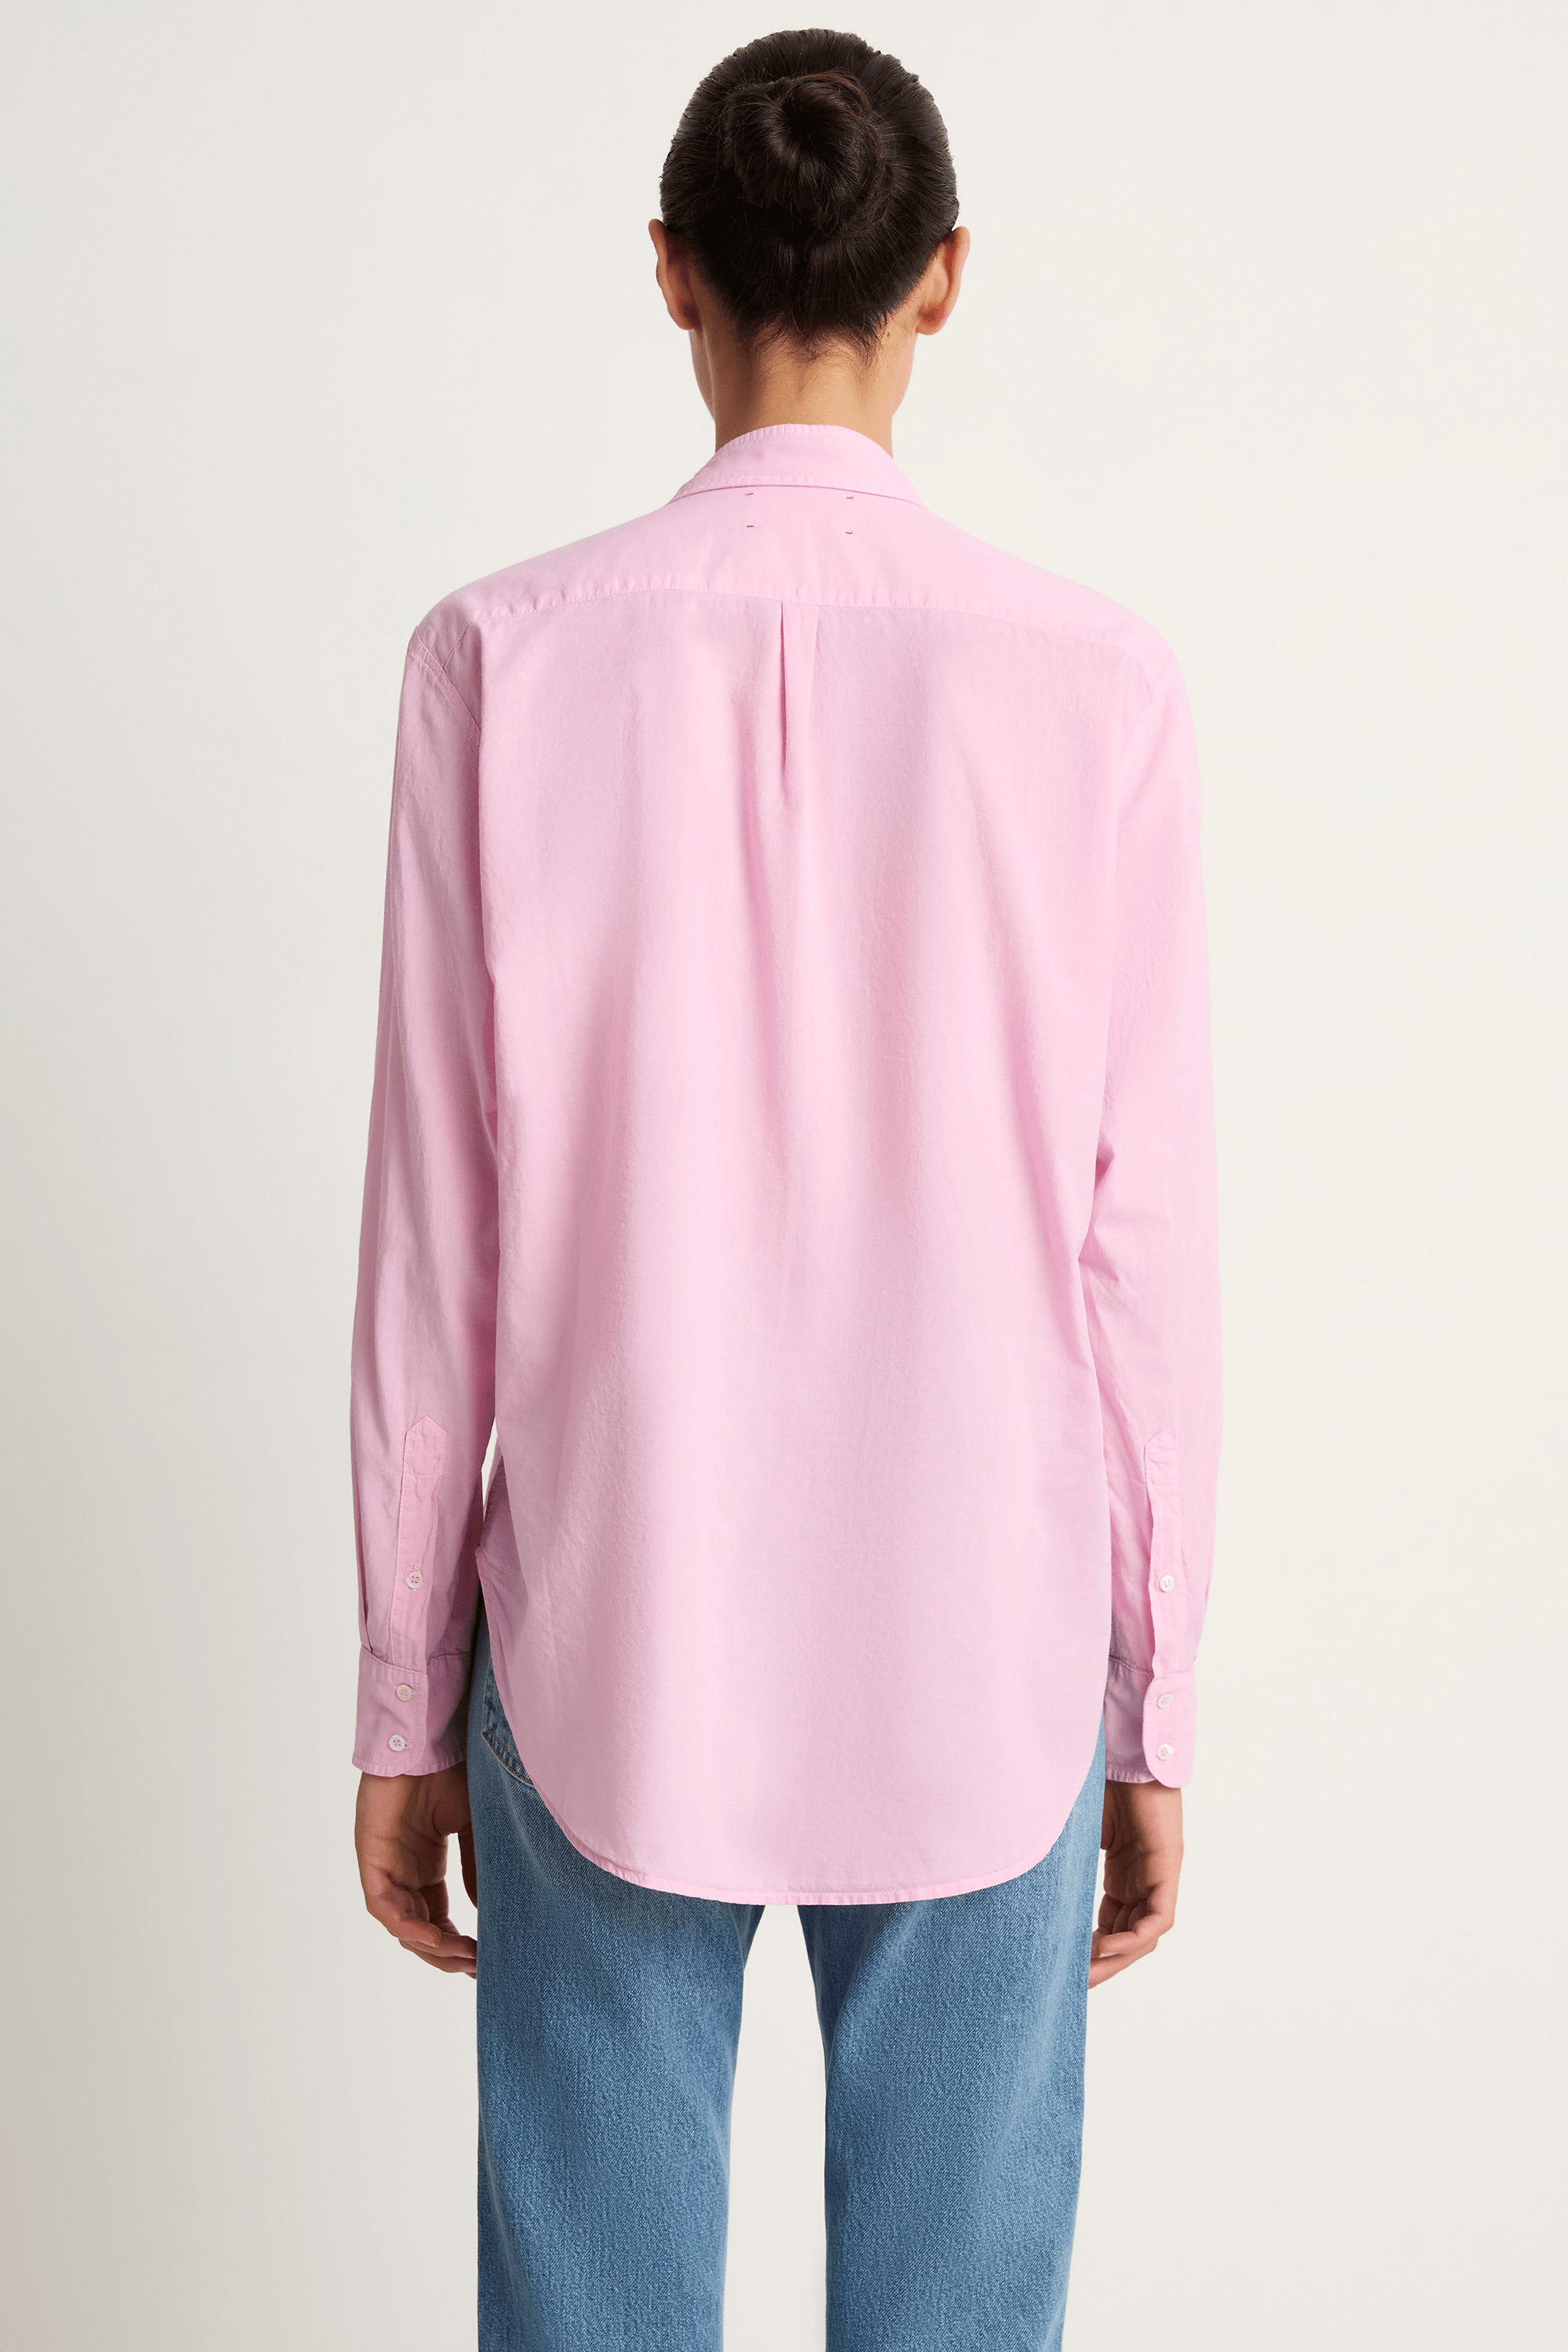 Xirena Beau Shirt - Cherry Blossom